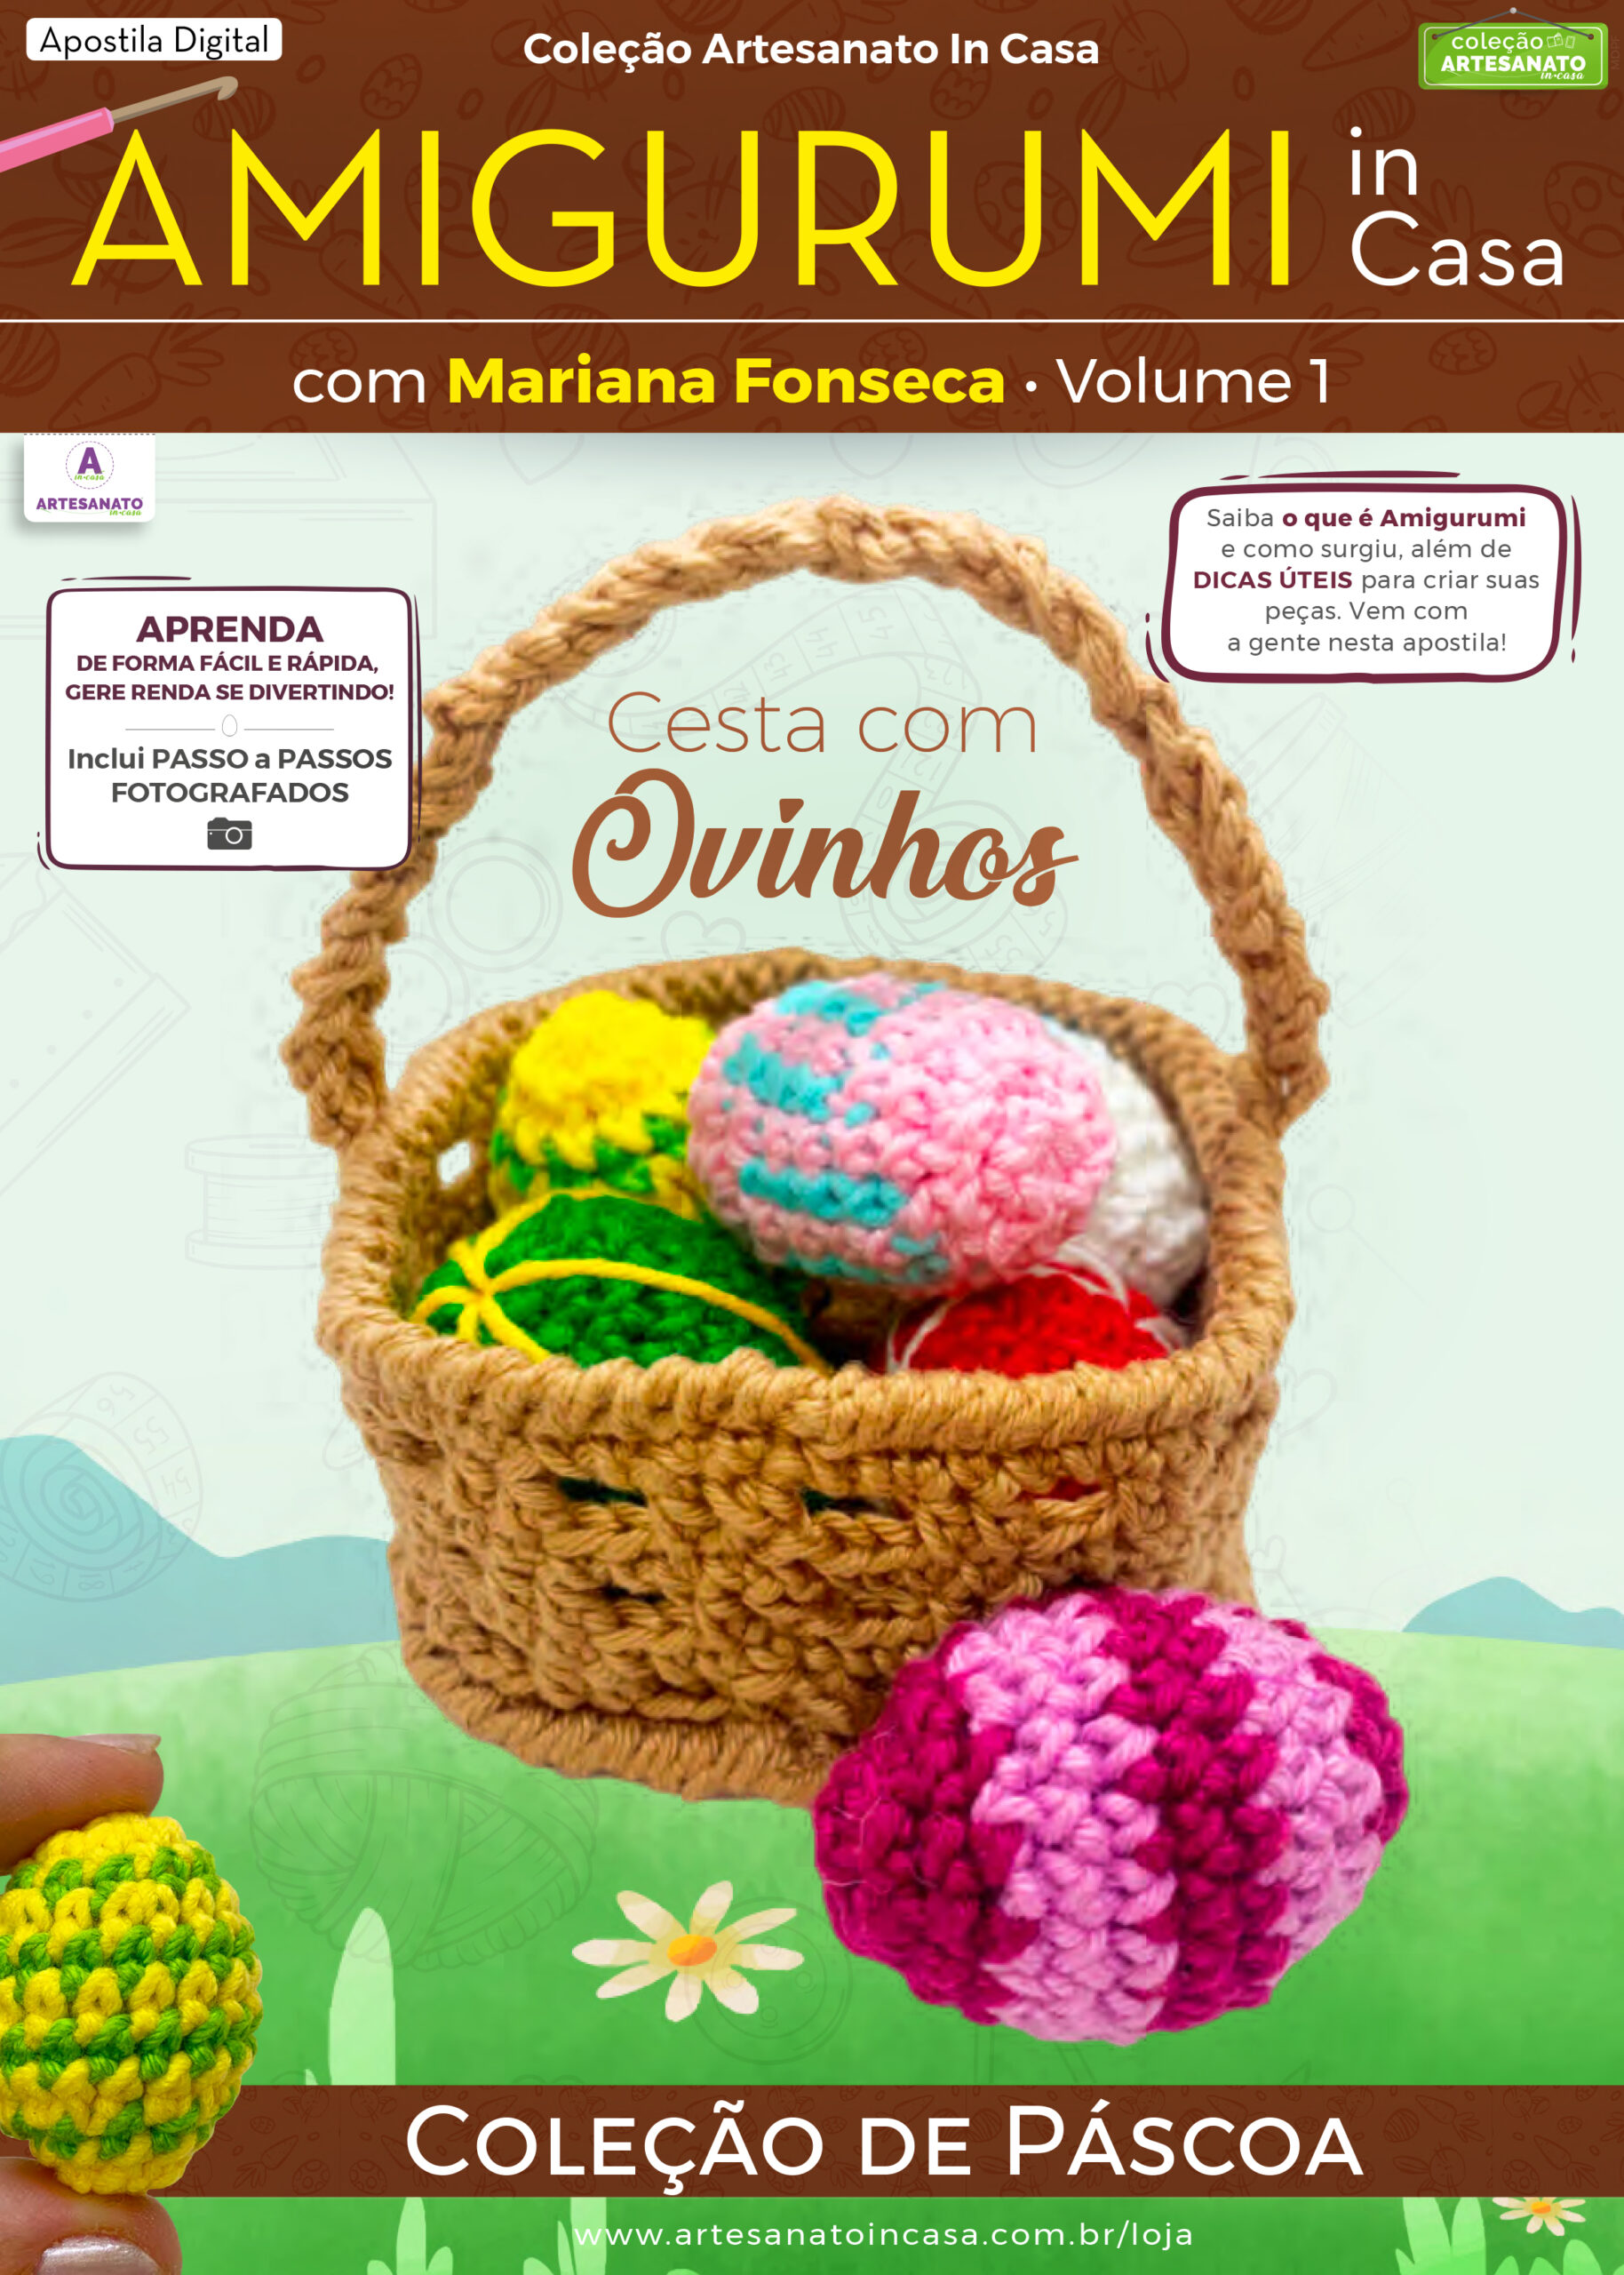 Apostila Digital – AMIGURUMI In Casa com Mariana Fonseca – Cesta com Ovinhos